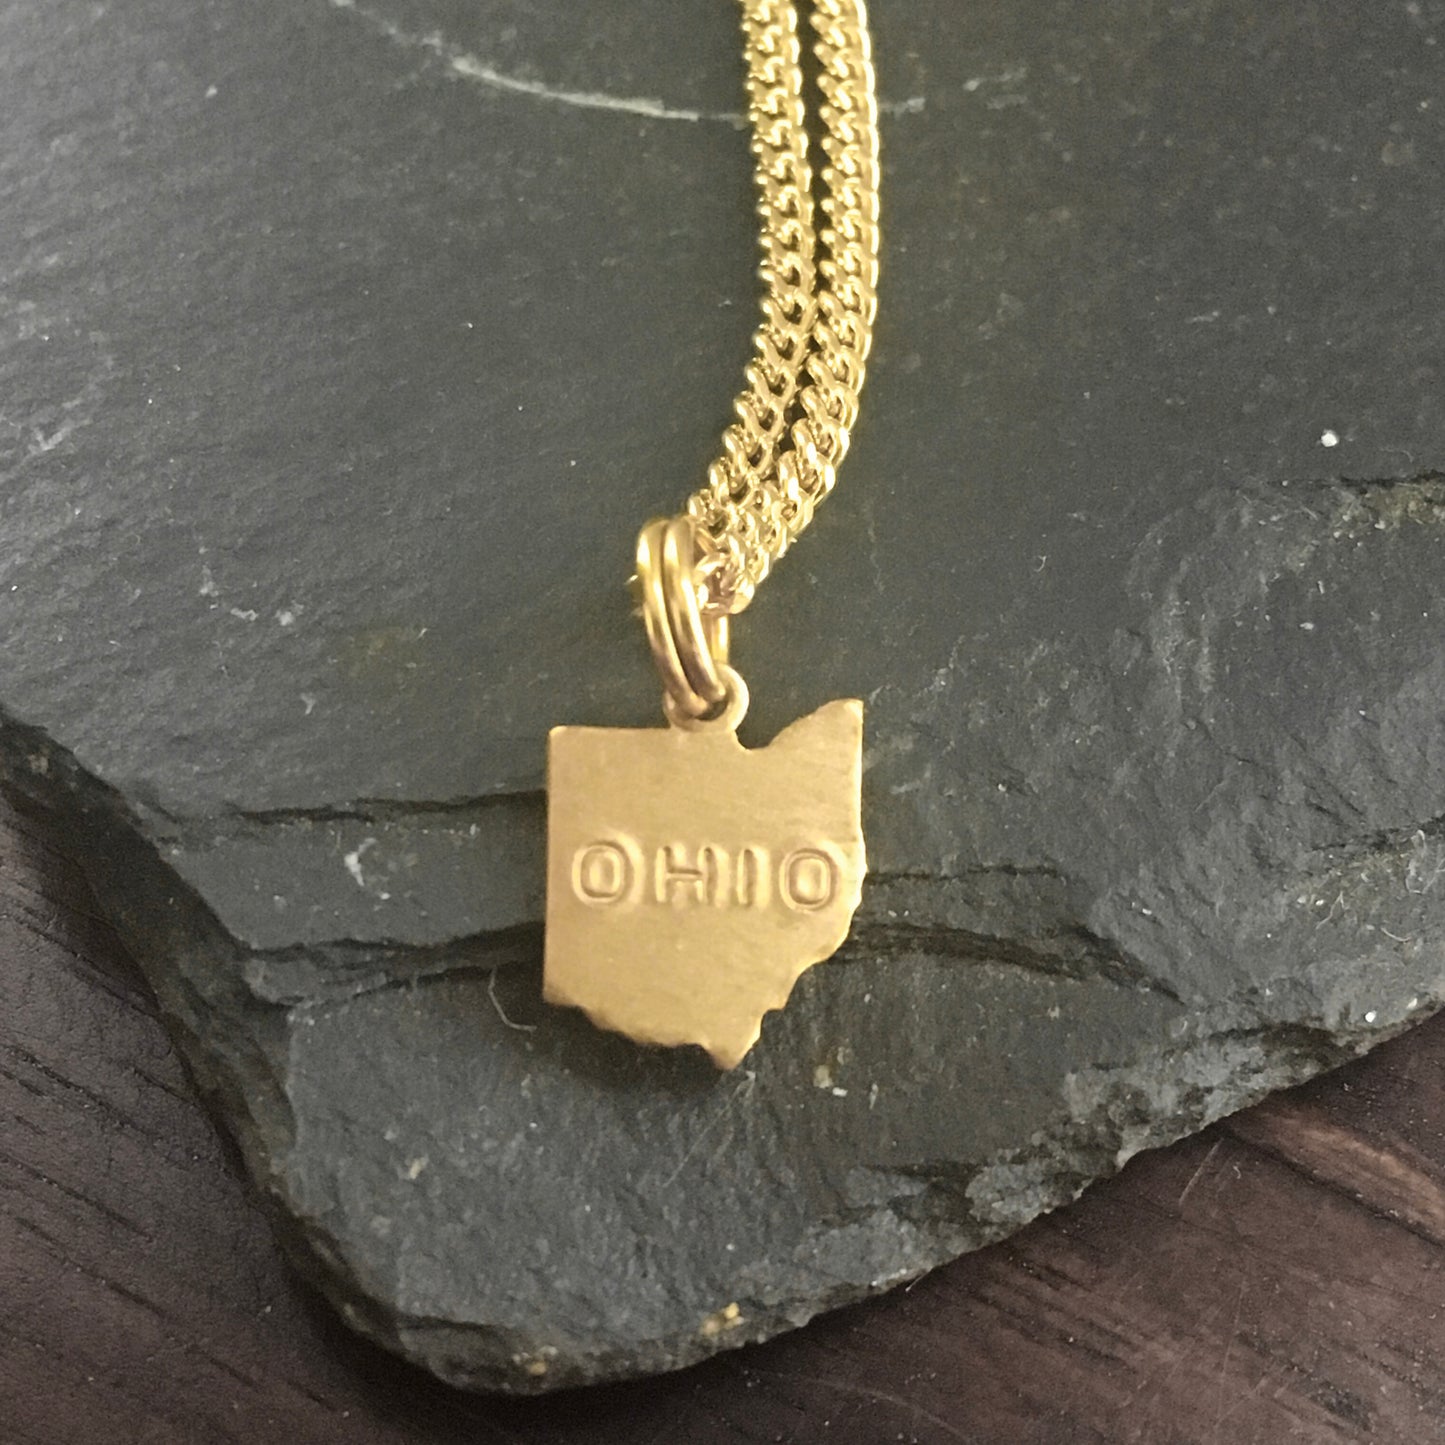 Gold Ohio Charm Necklace - OHIO stamped